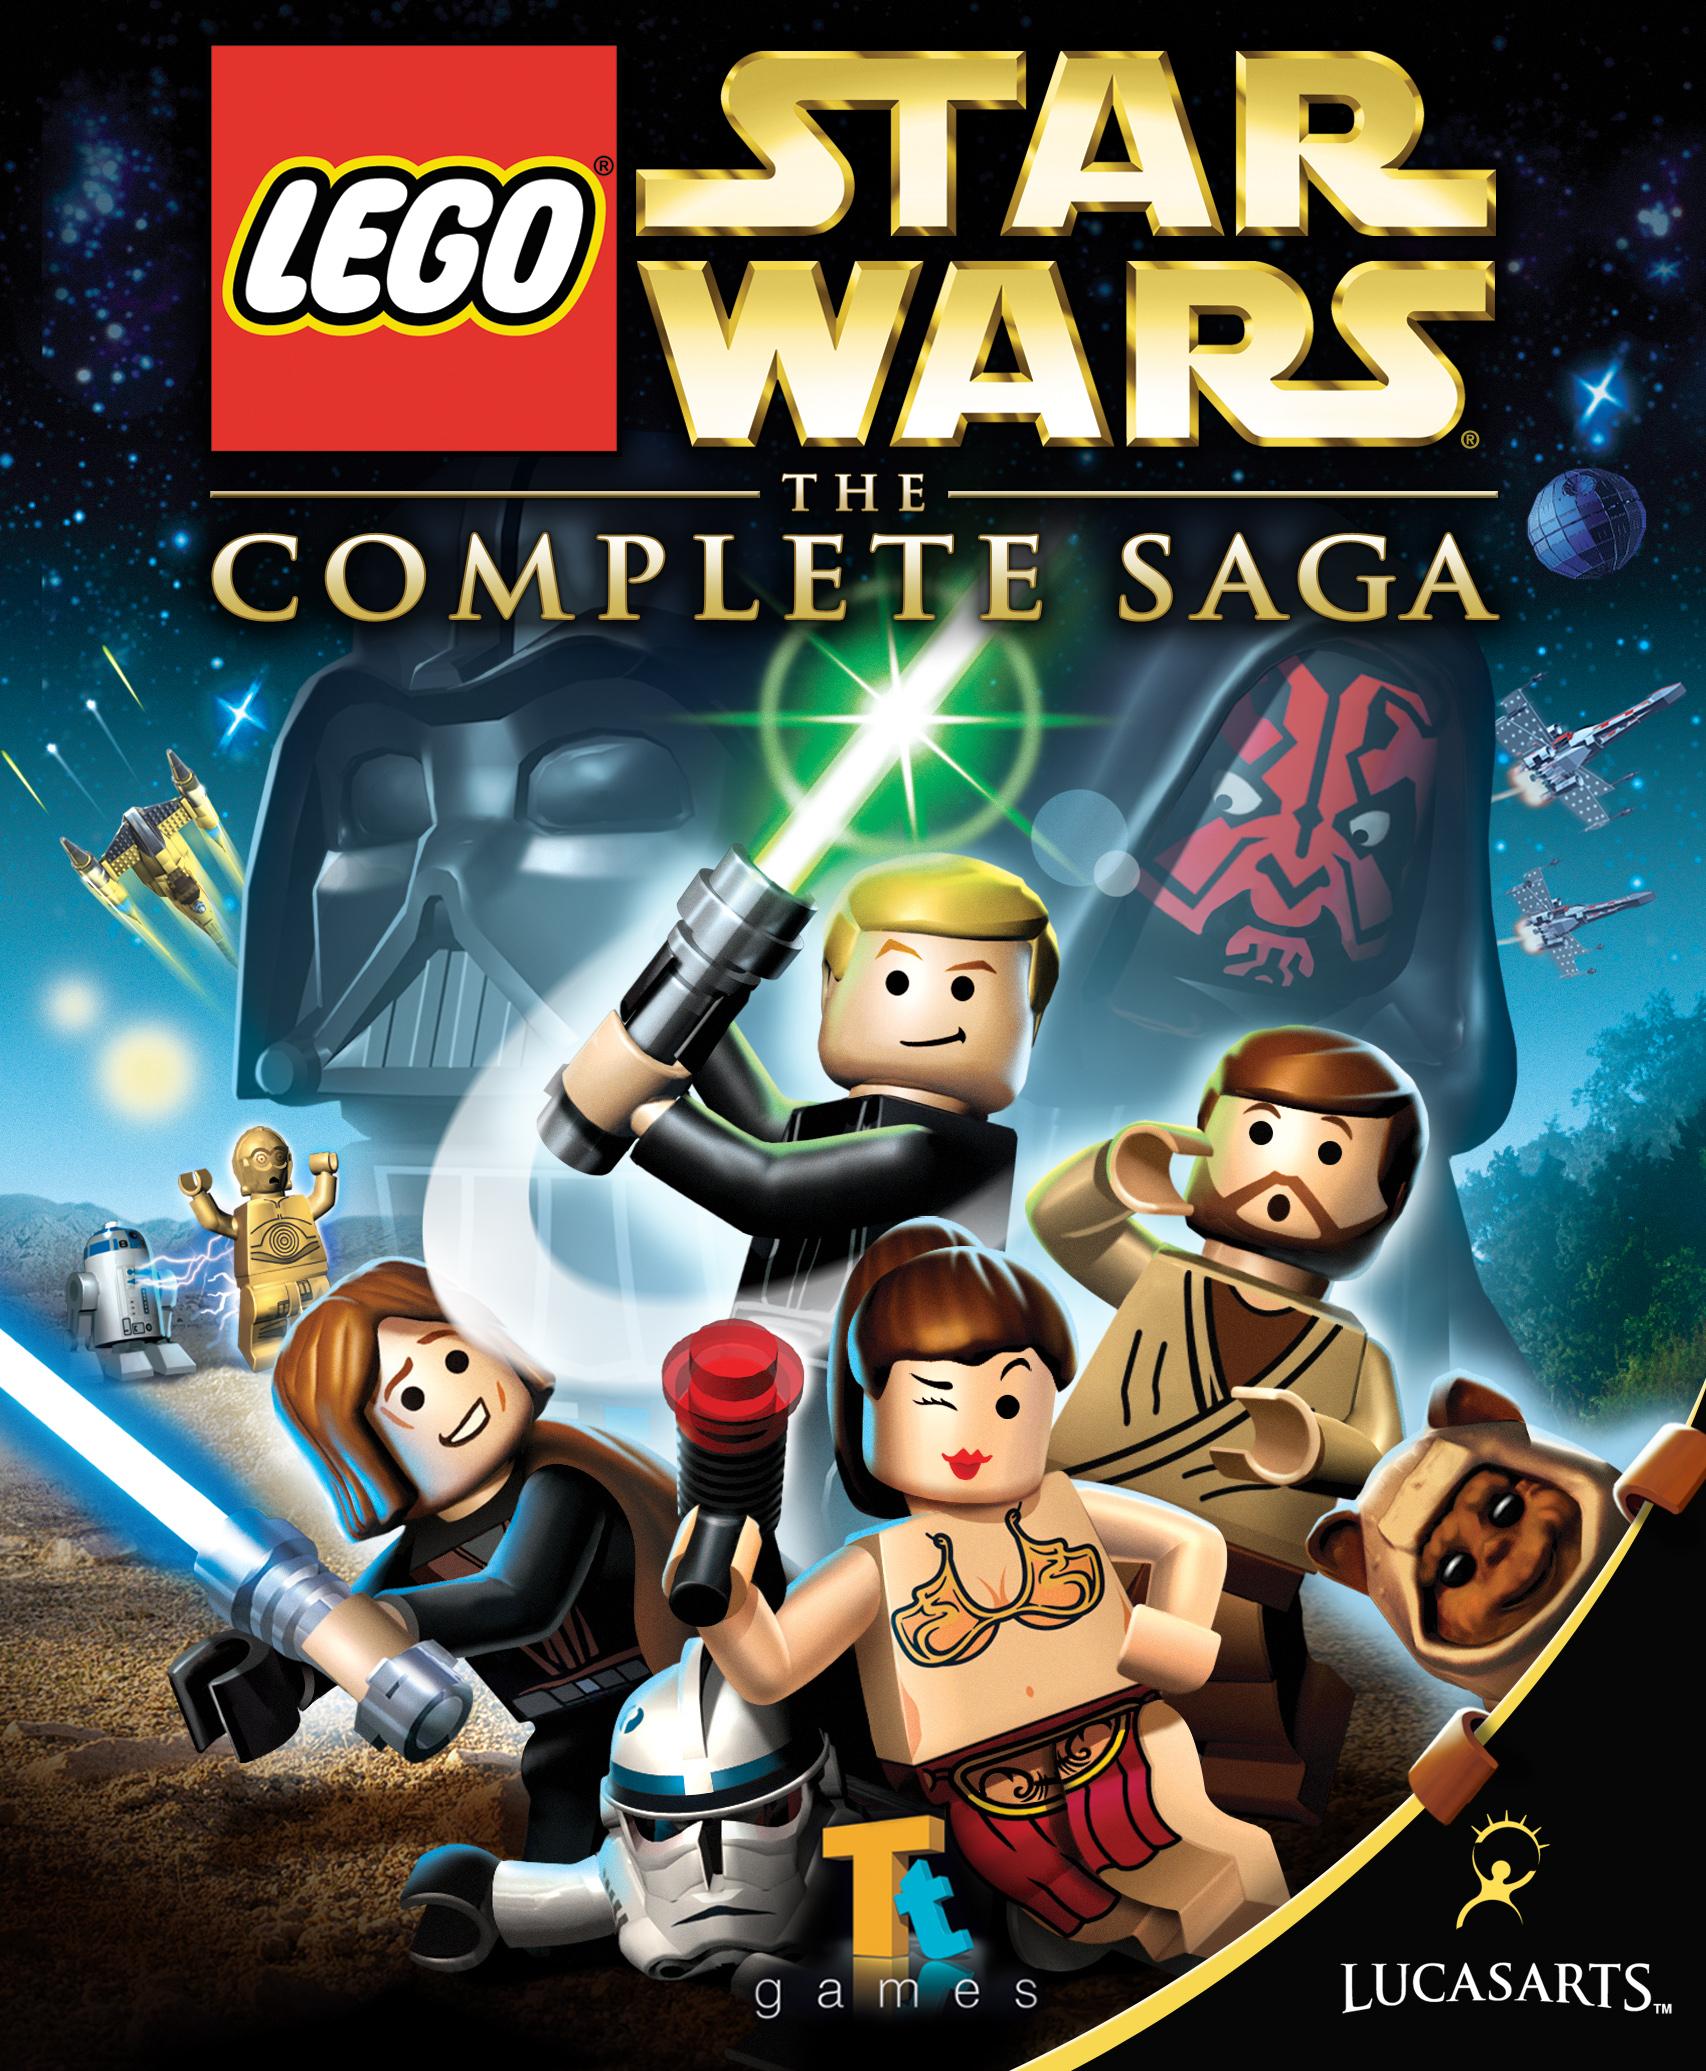 Lego Star Wars: The Complete Saga - Wikipedia